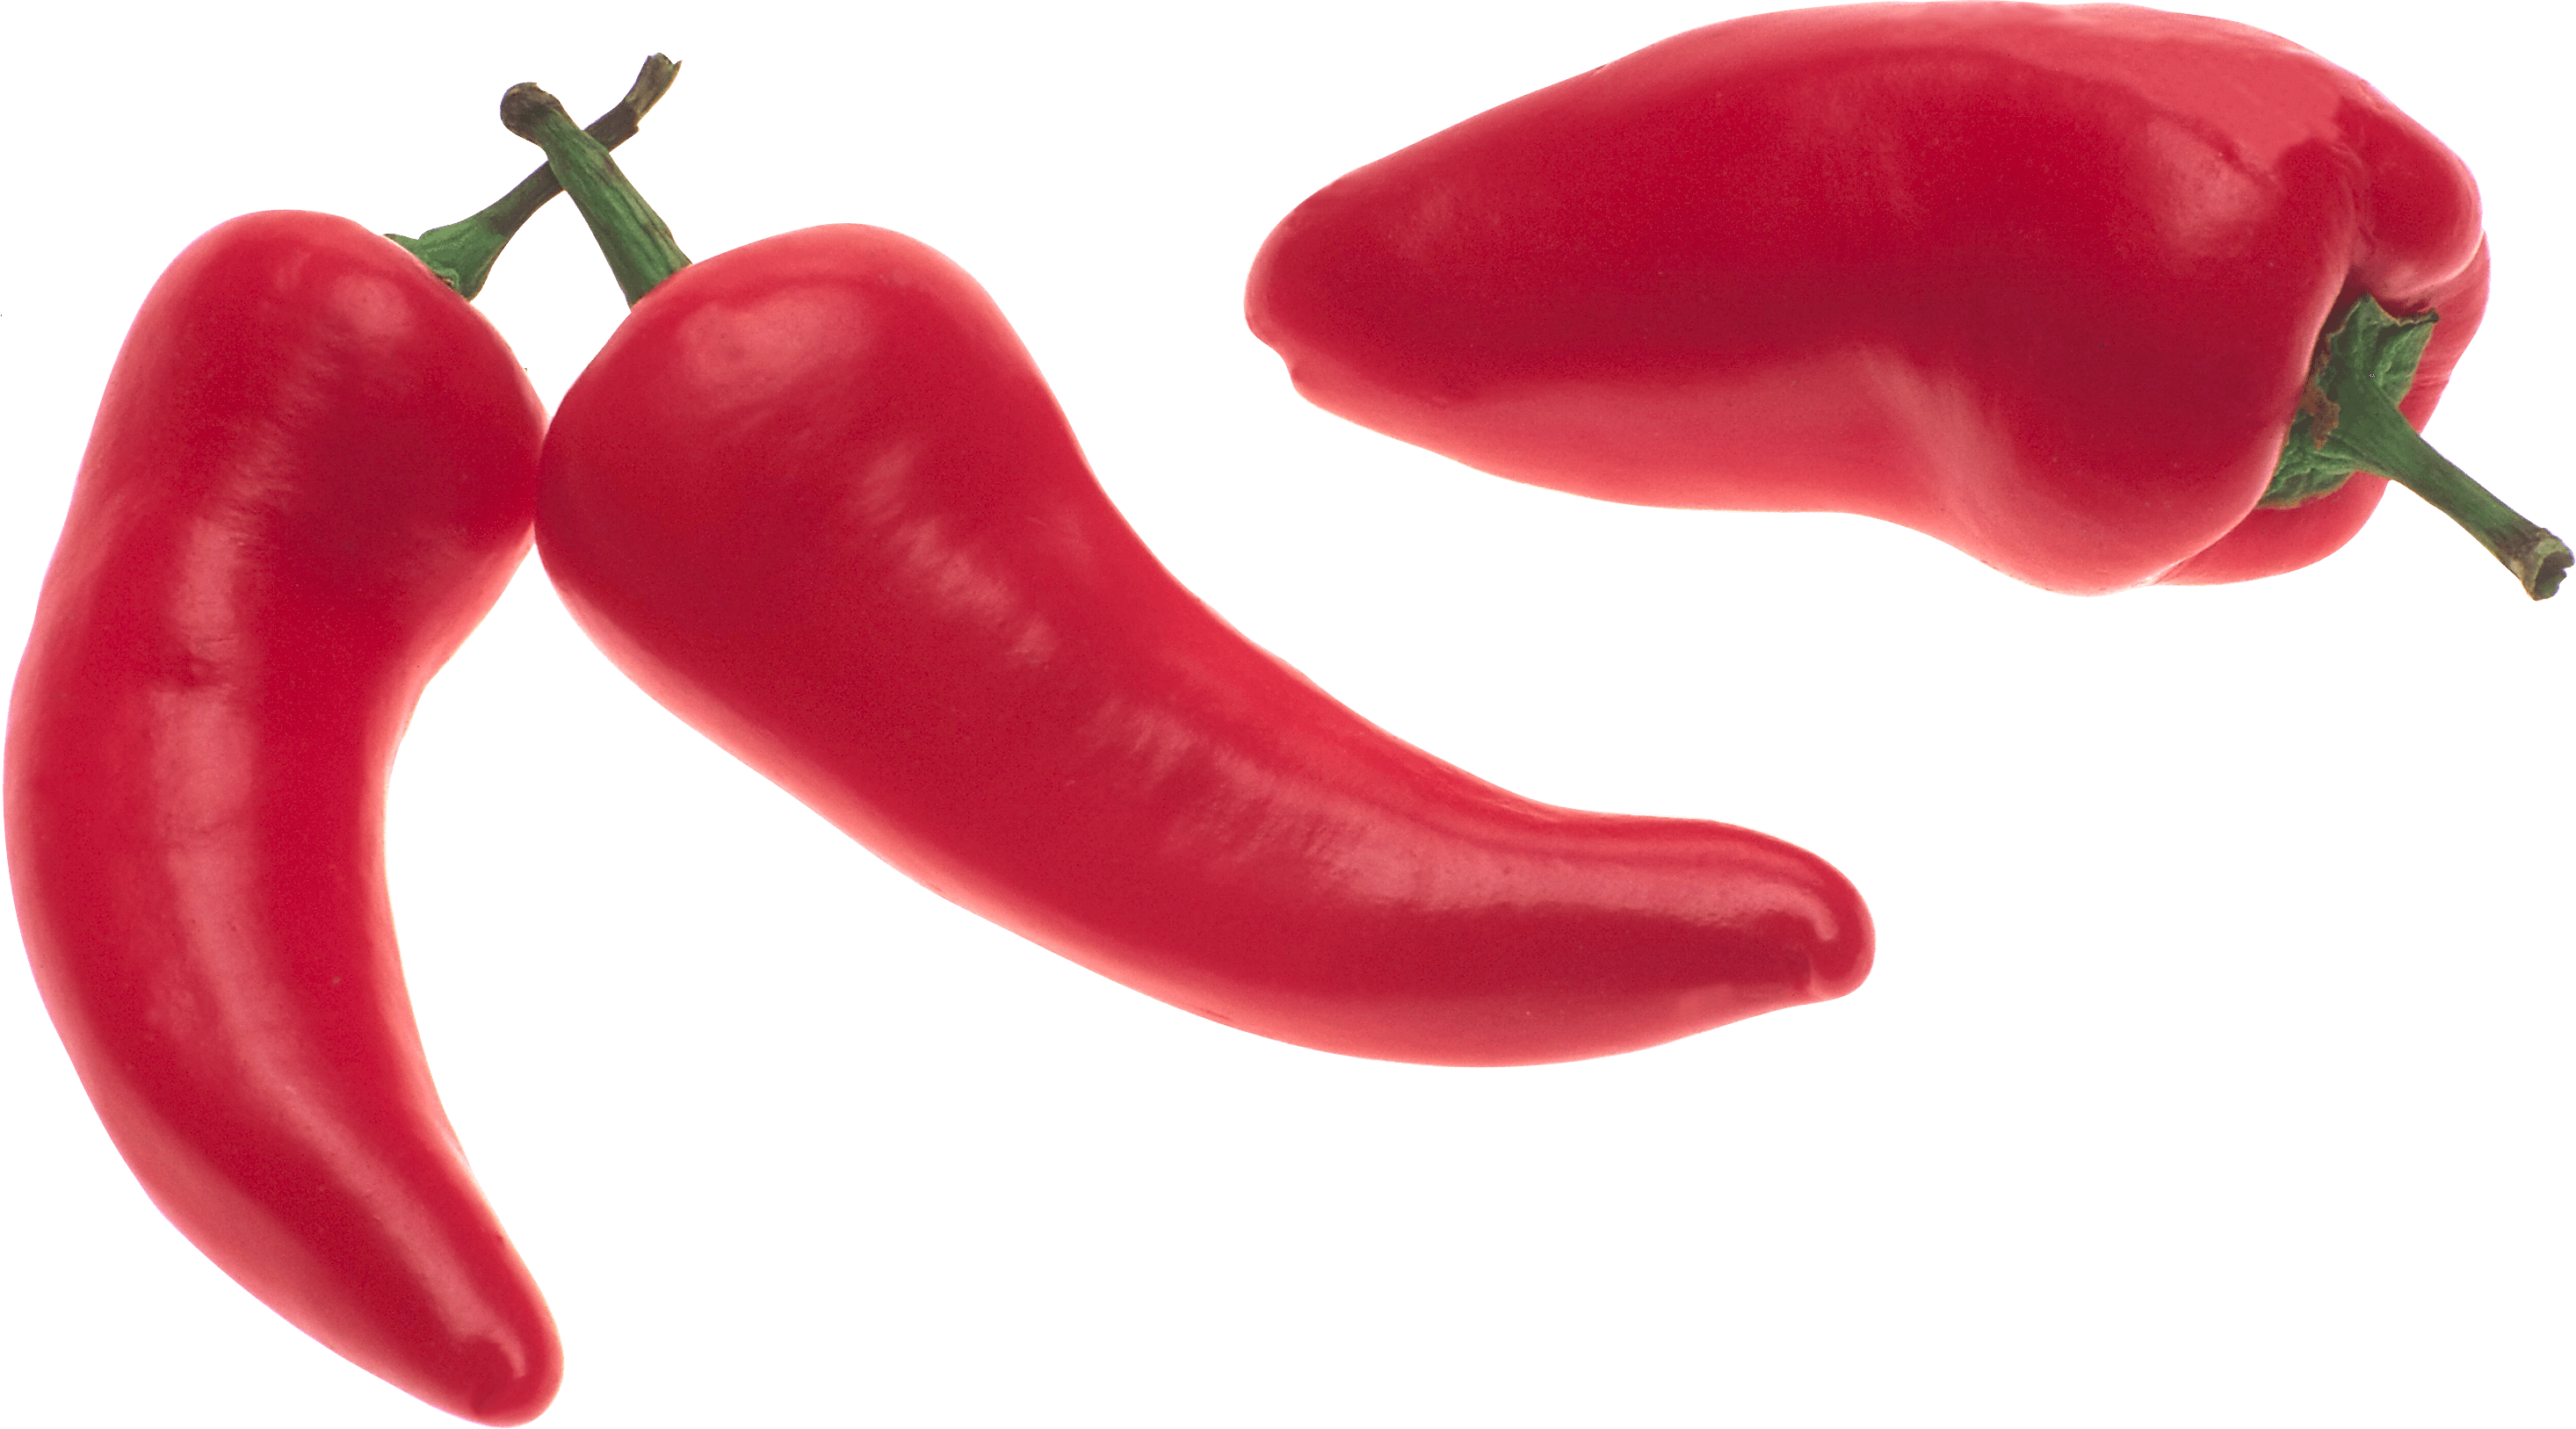 Chili Pepper Grains Peppercorn Pop PNG